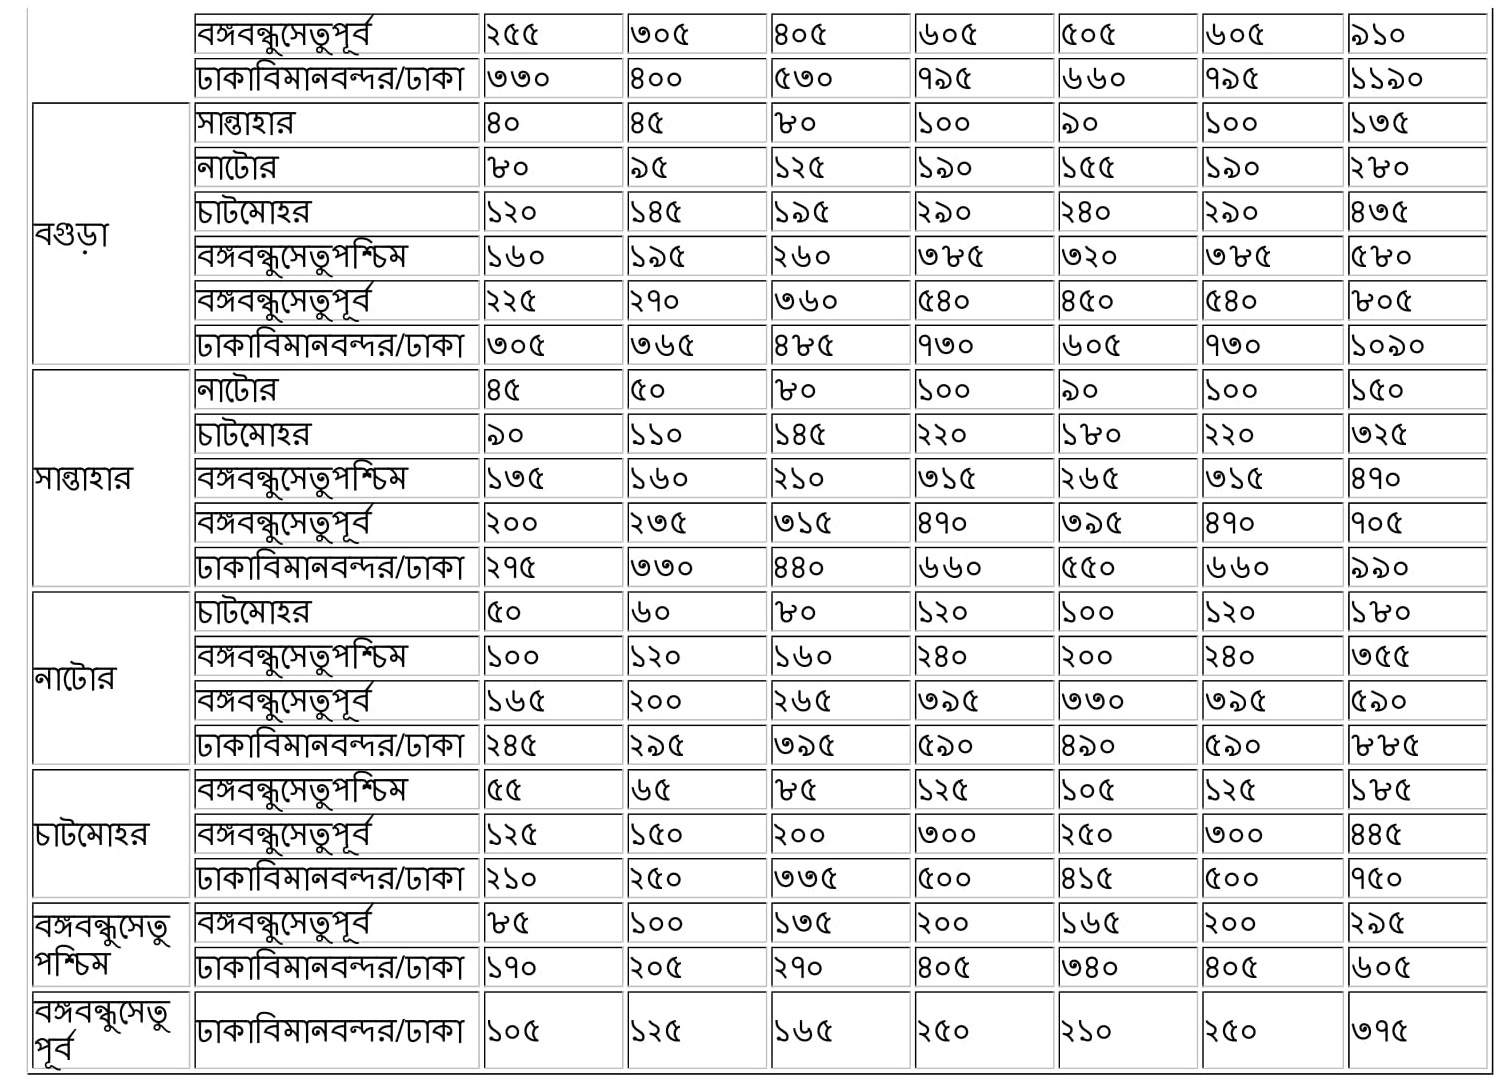 Bangladesh Railway Ticket Price 2022 [East Zone, West Zone]